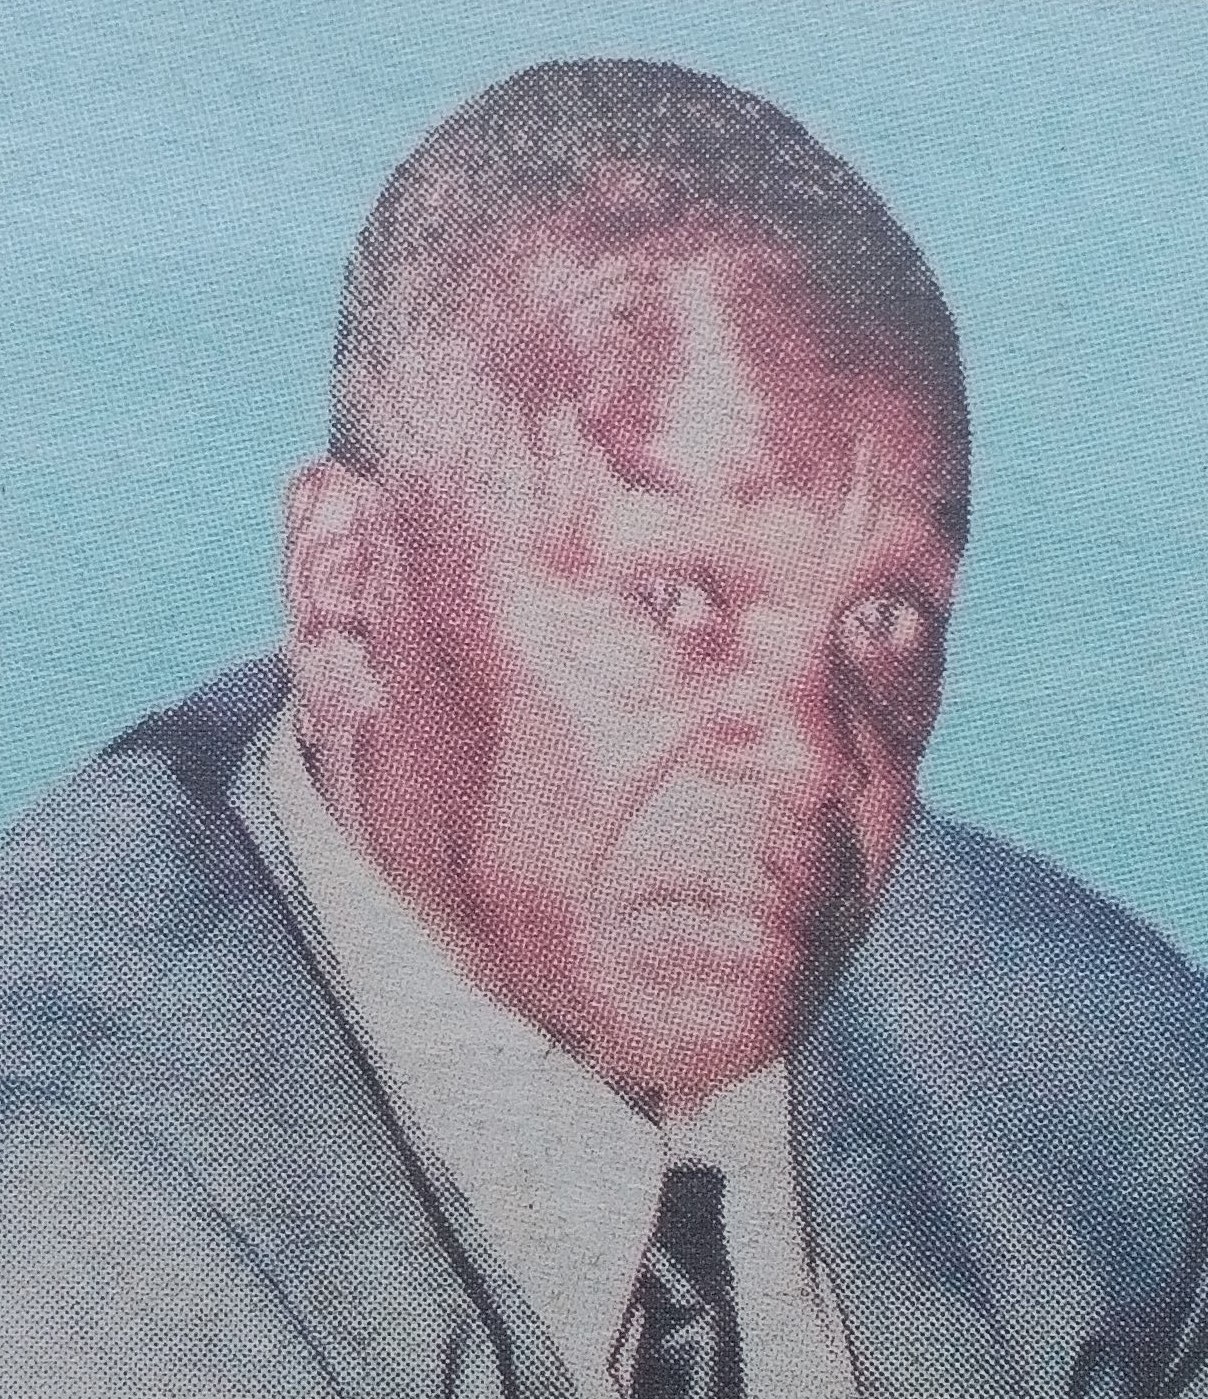 Obituary Image of Elder Simon Mwaniki Kamutu